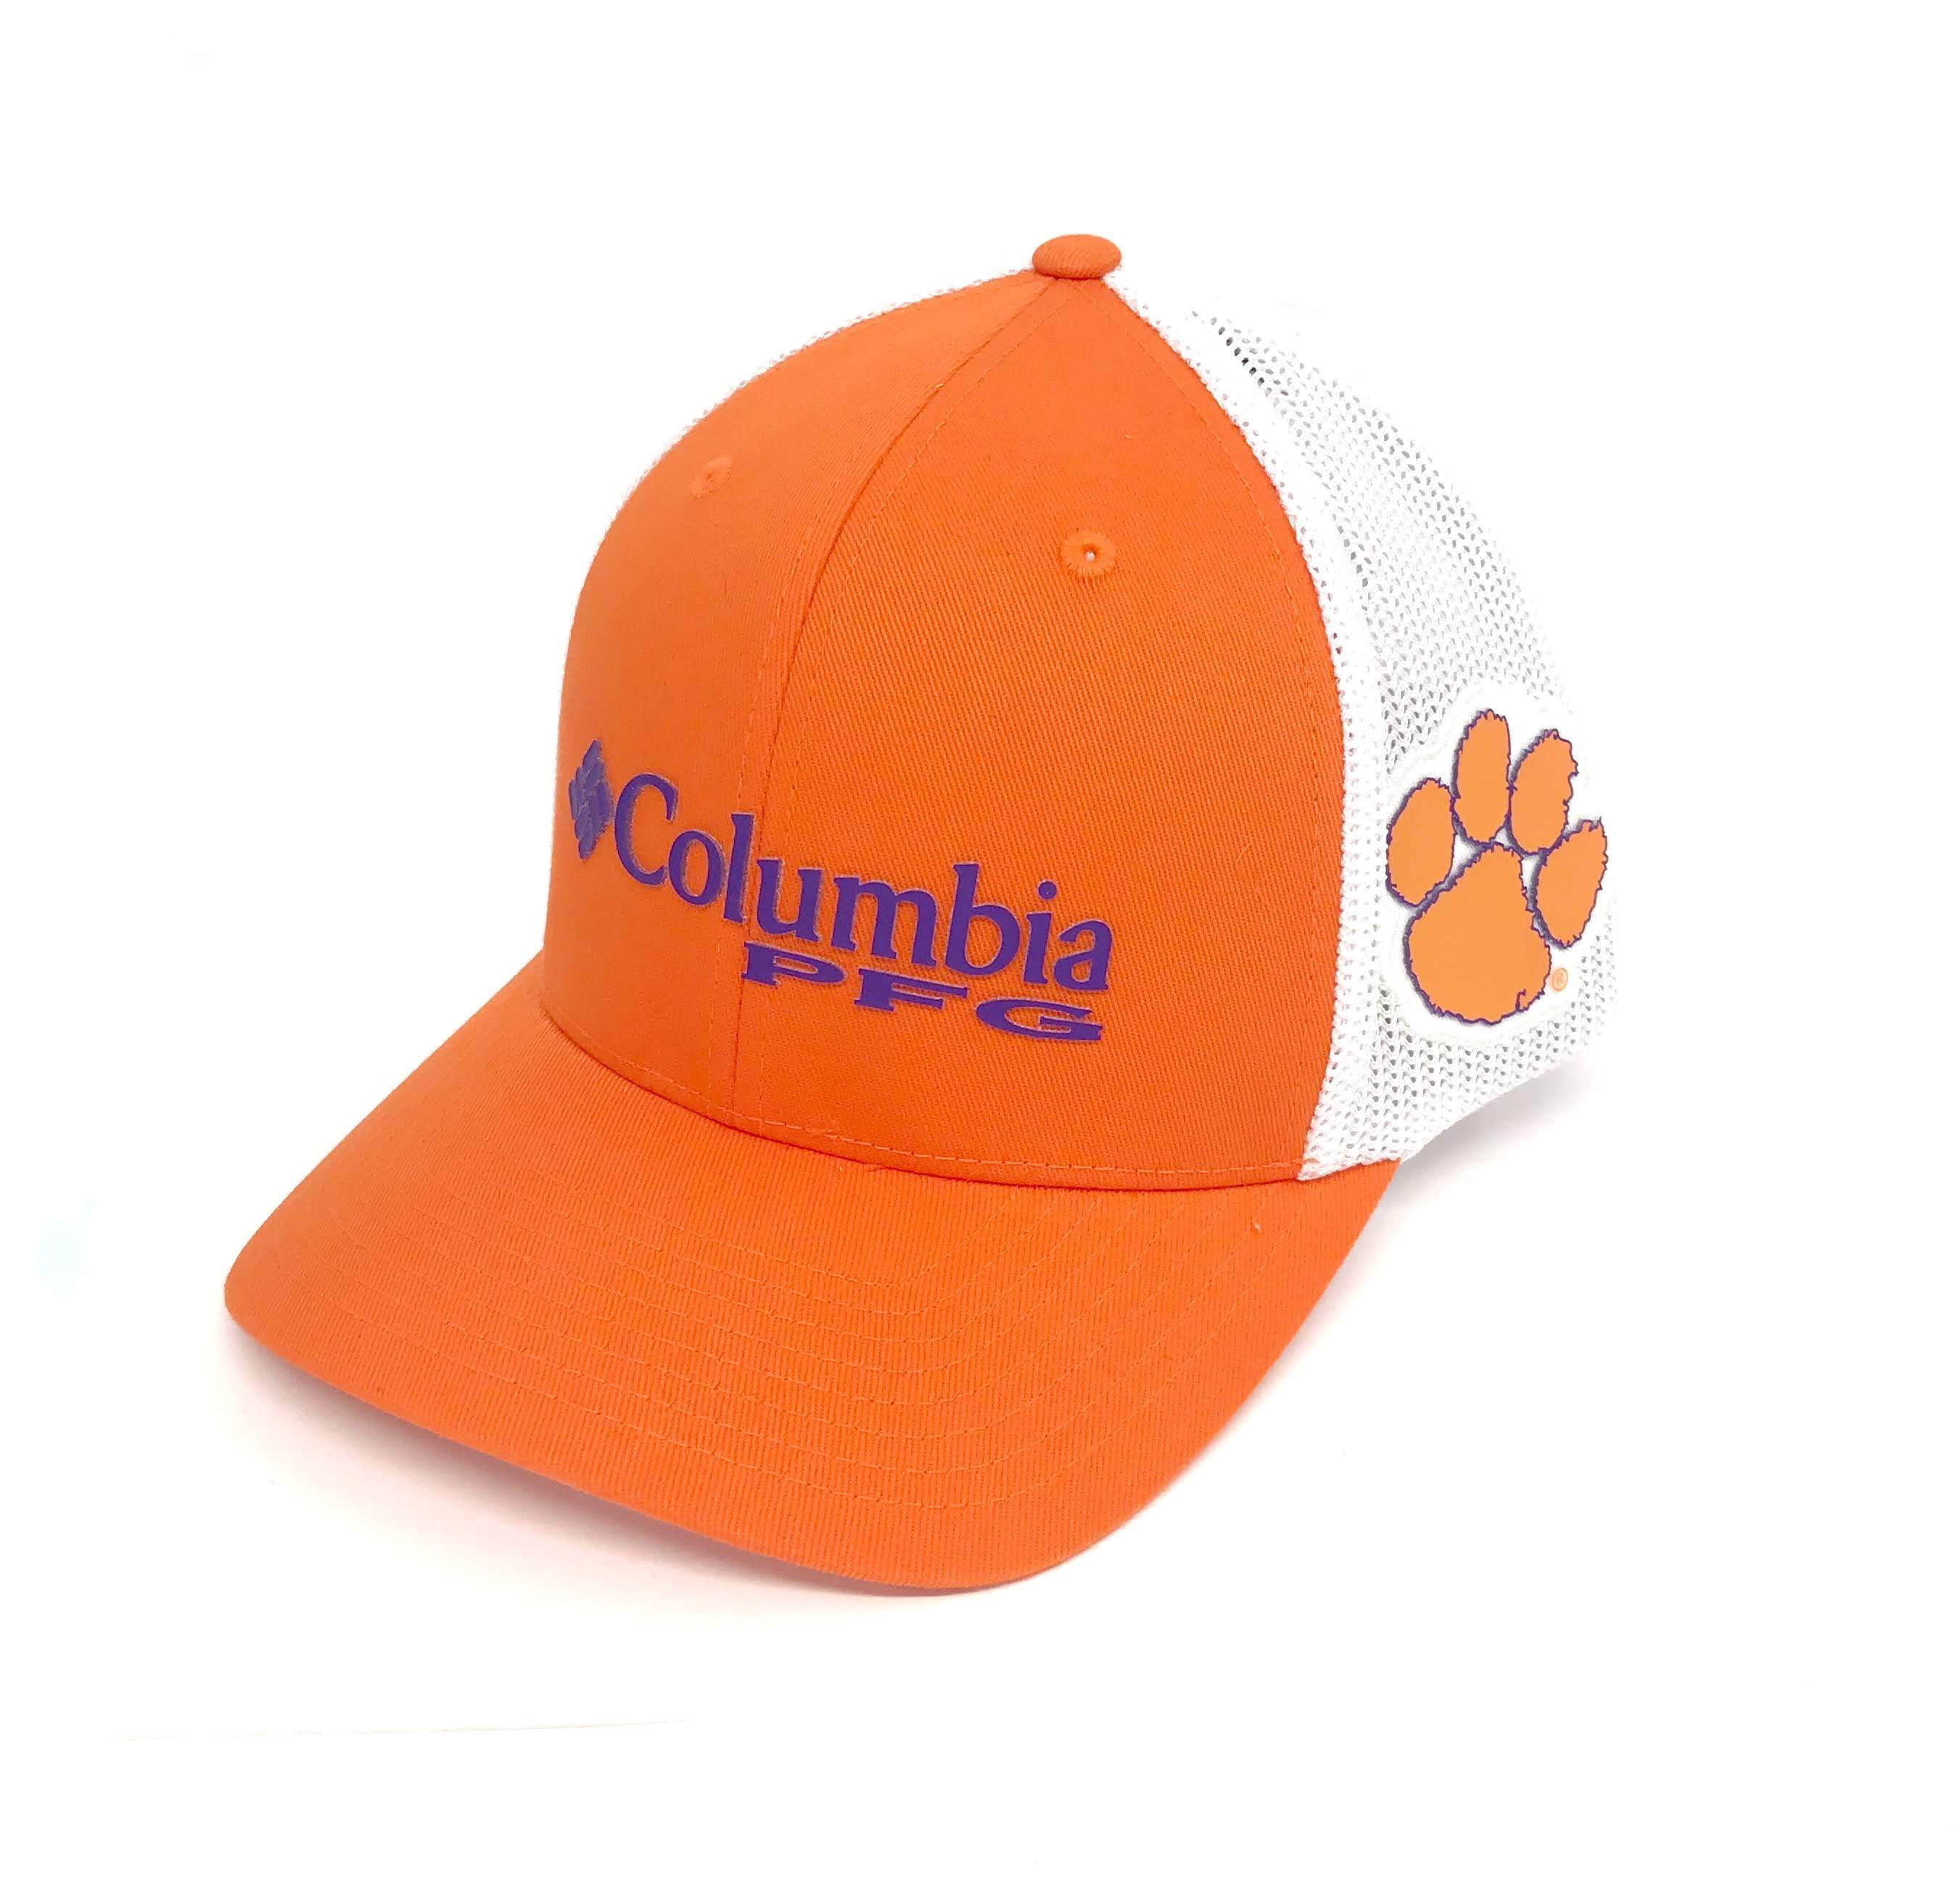 Columbia PFG Mesh Ball Cap - Clemson - L/XL - Orange